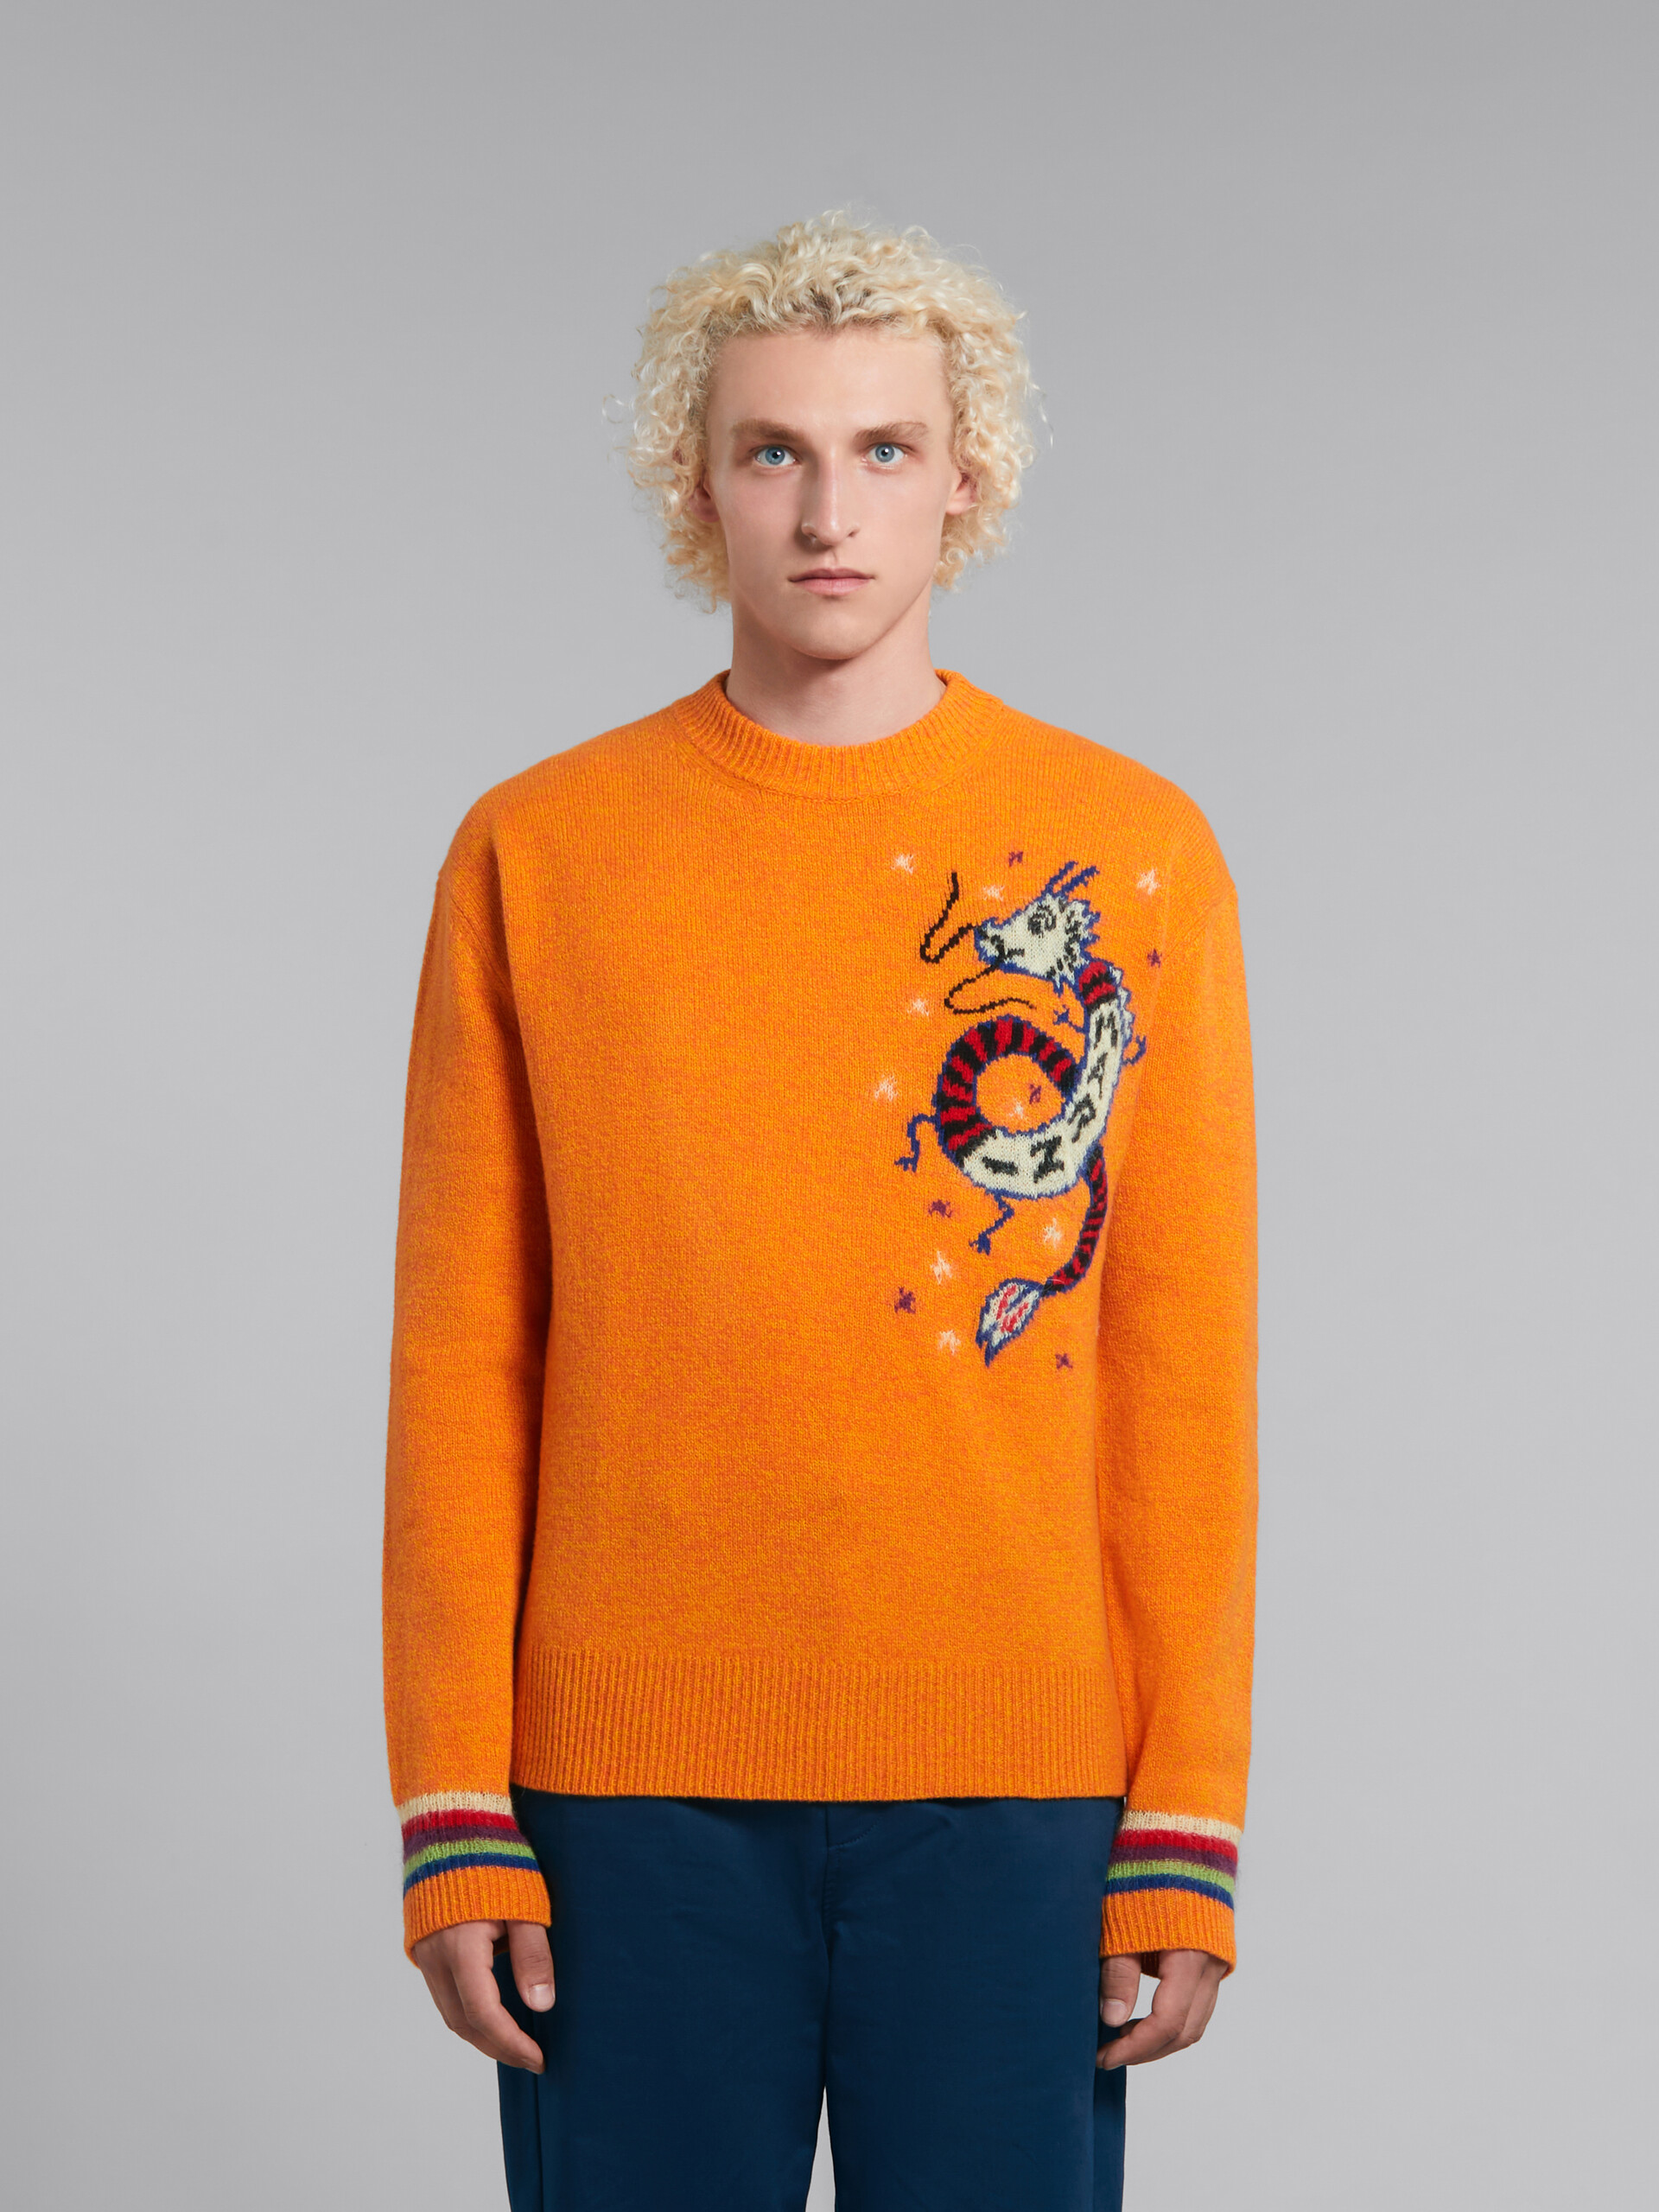 Orange wool jumper with jacquard dragon - Pullovers - Image 2